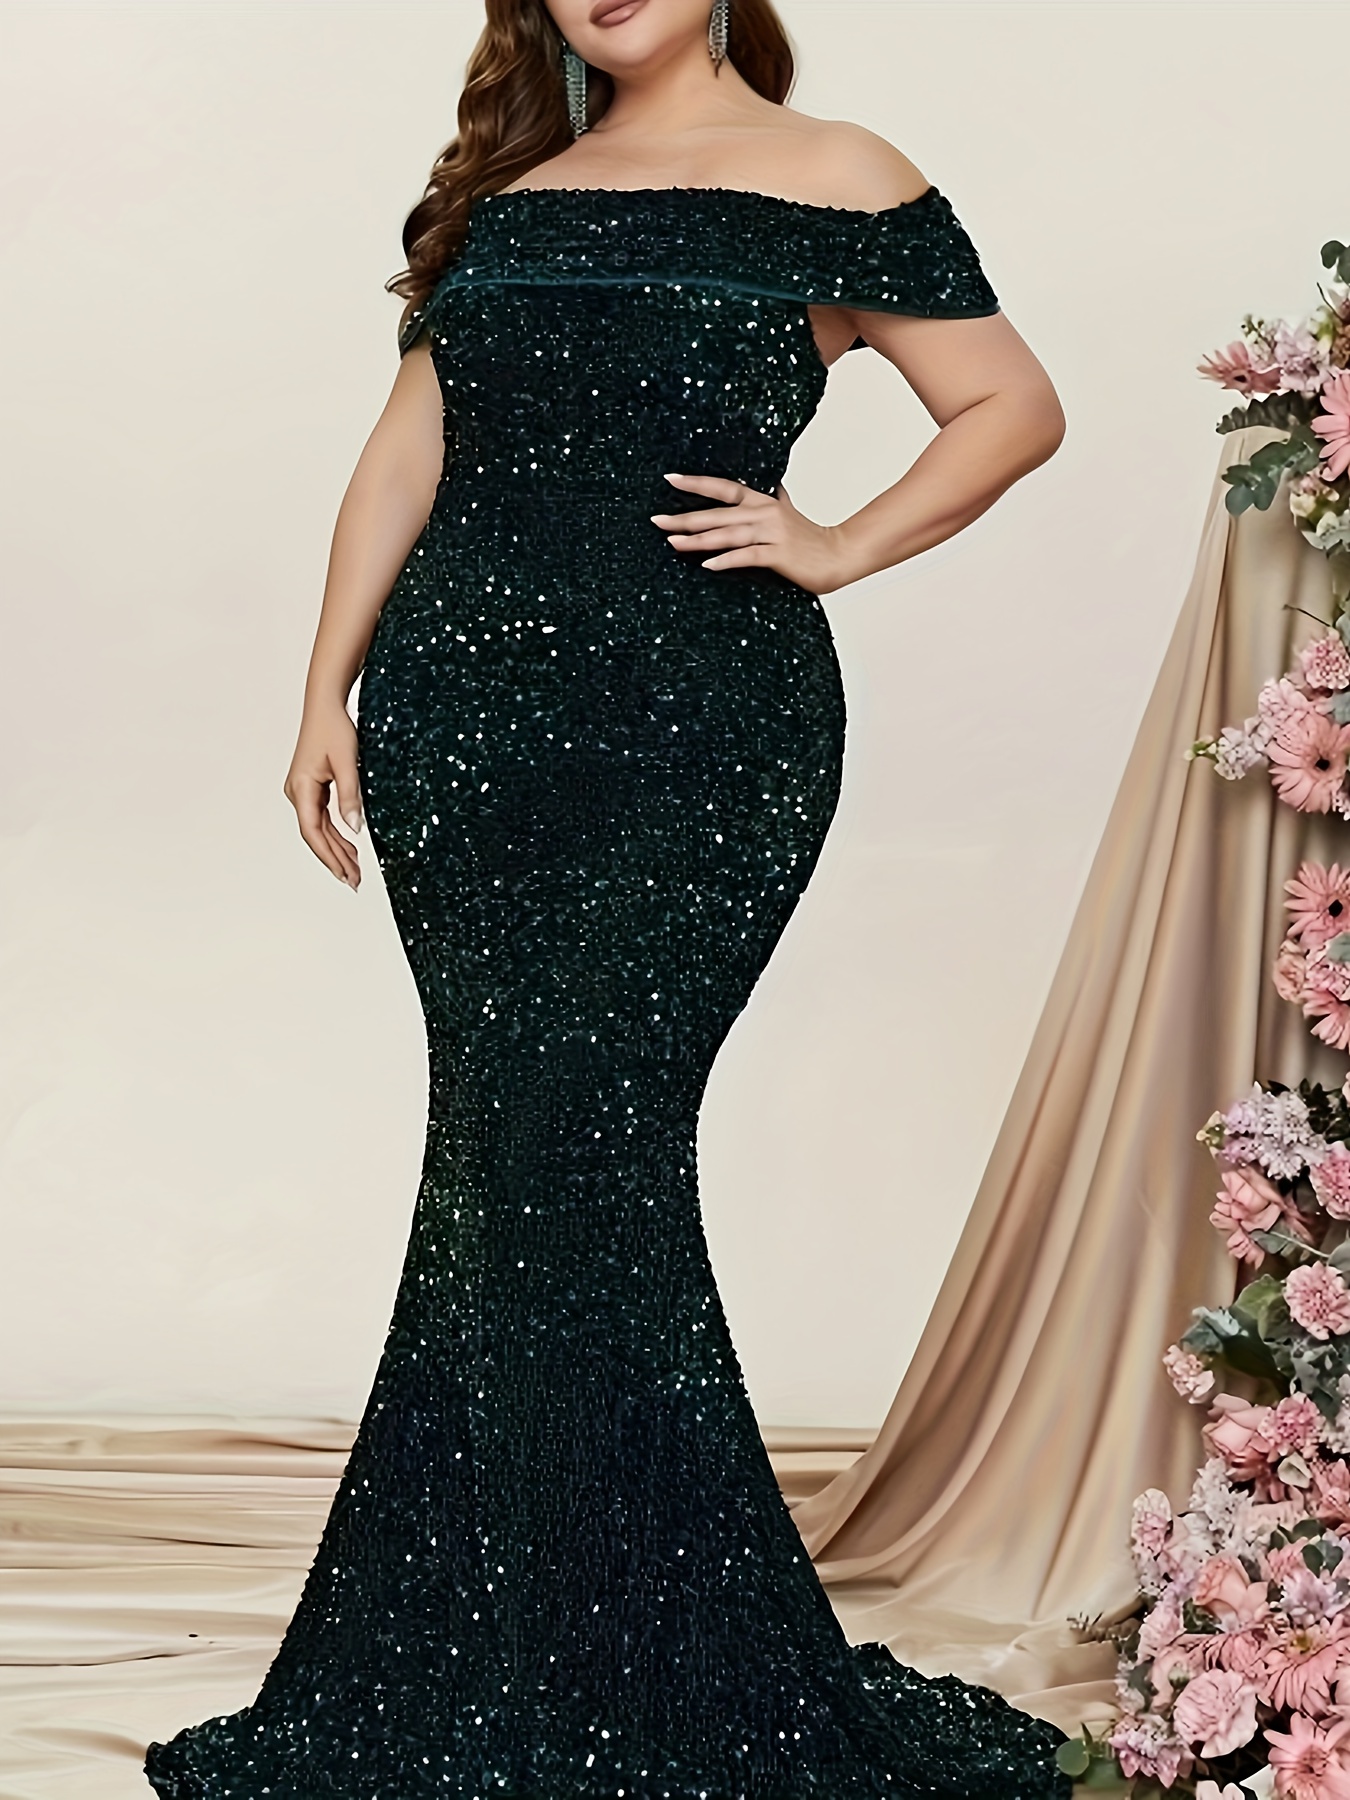 Sequin Trumpet Prom Dress Plus Size Tiffany Designs 16042 